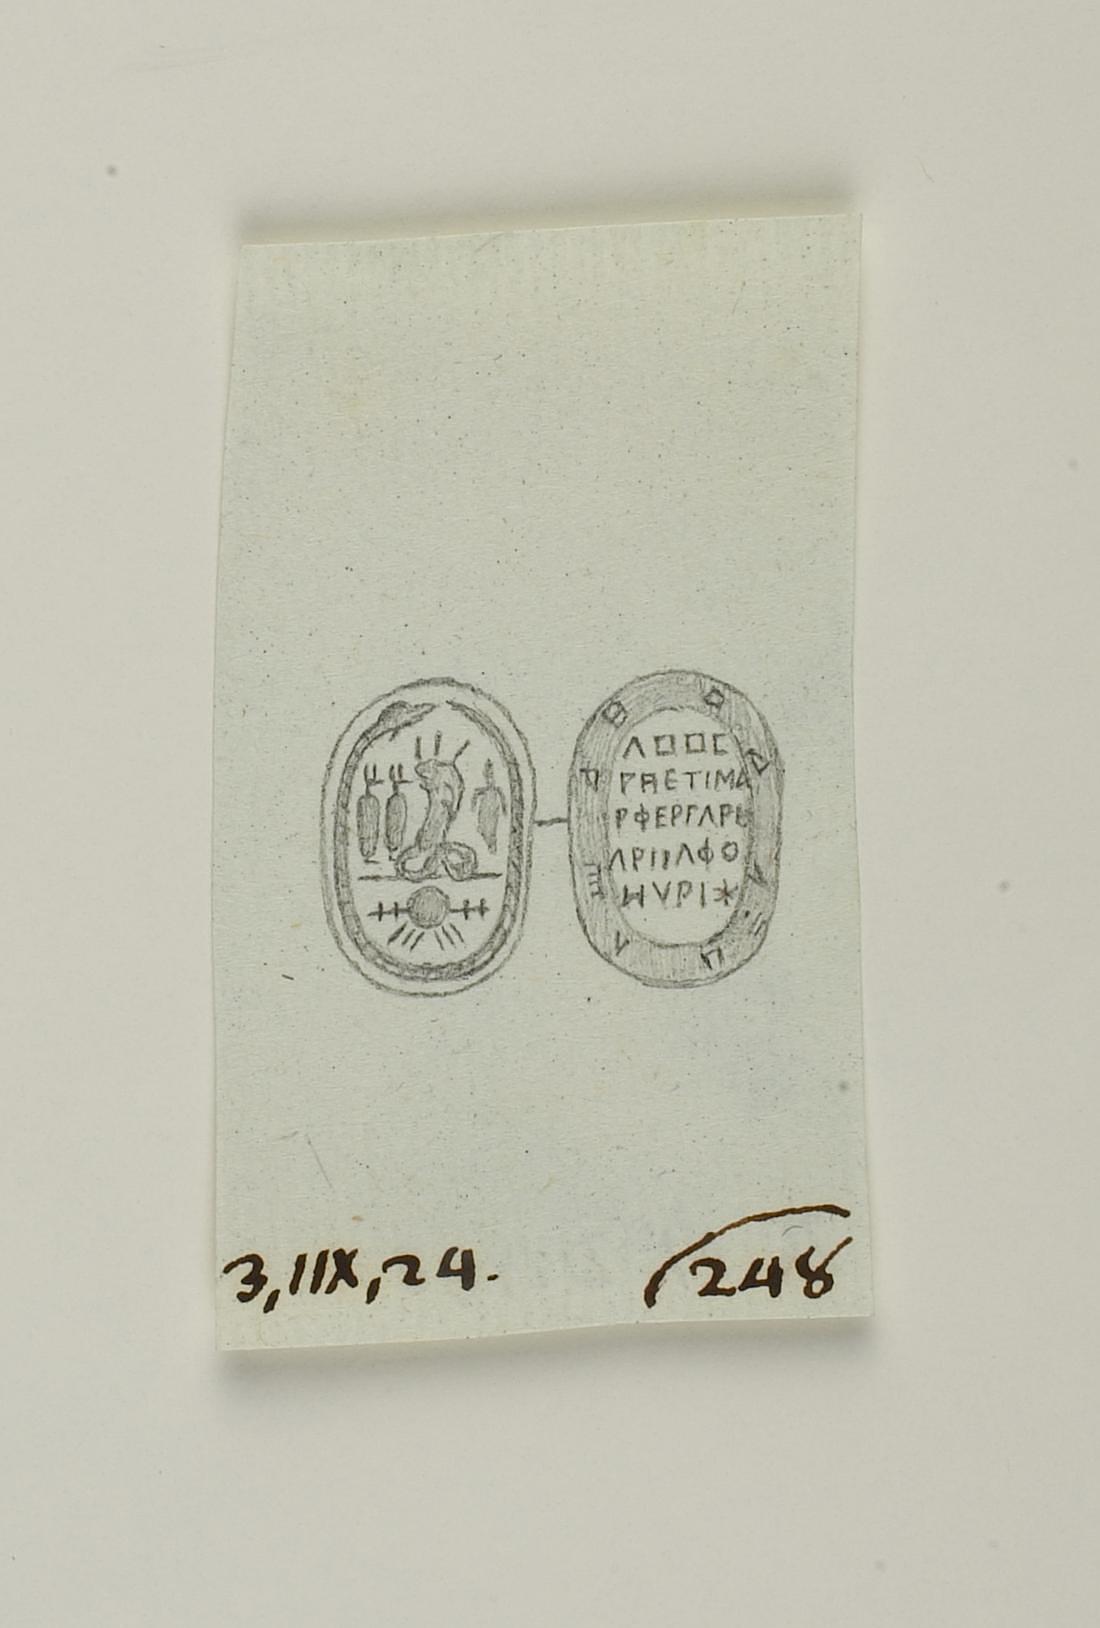 Uraeus, Anubis figure, Canopic jar, snake bites it's snake. Inscription, D1468